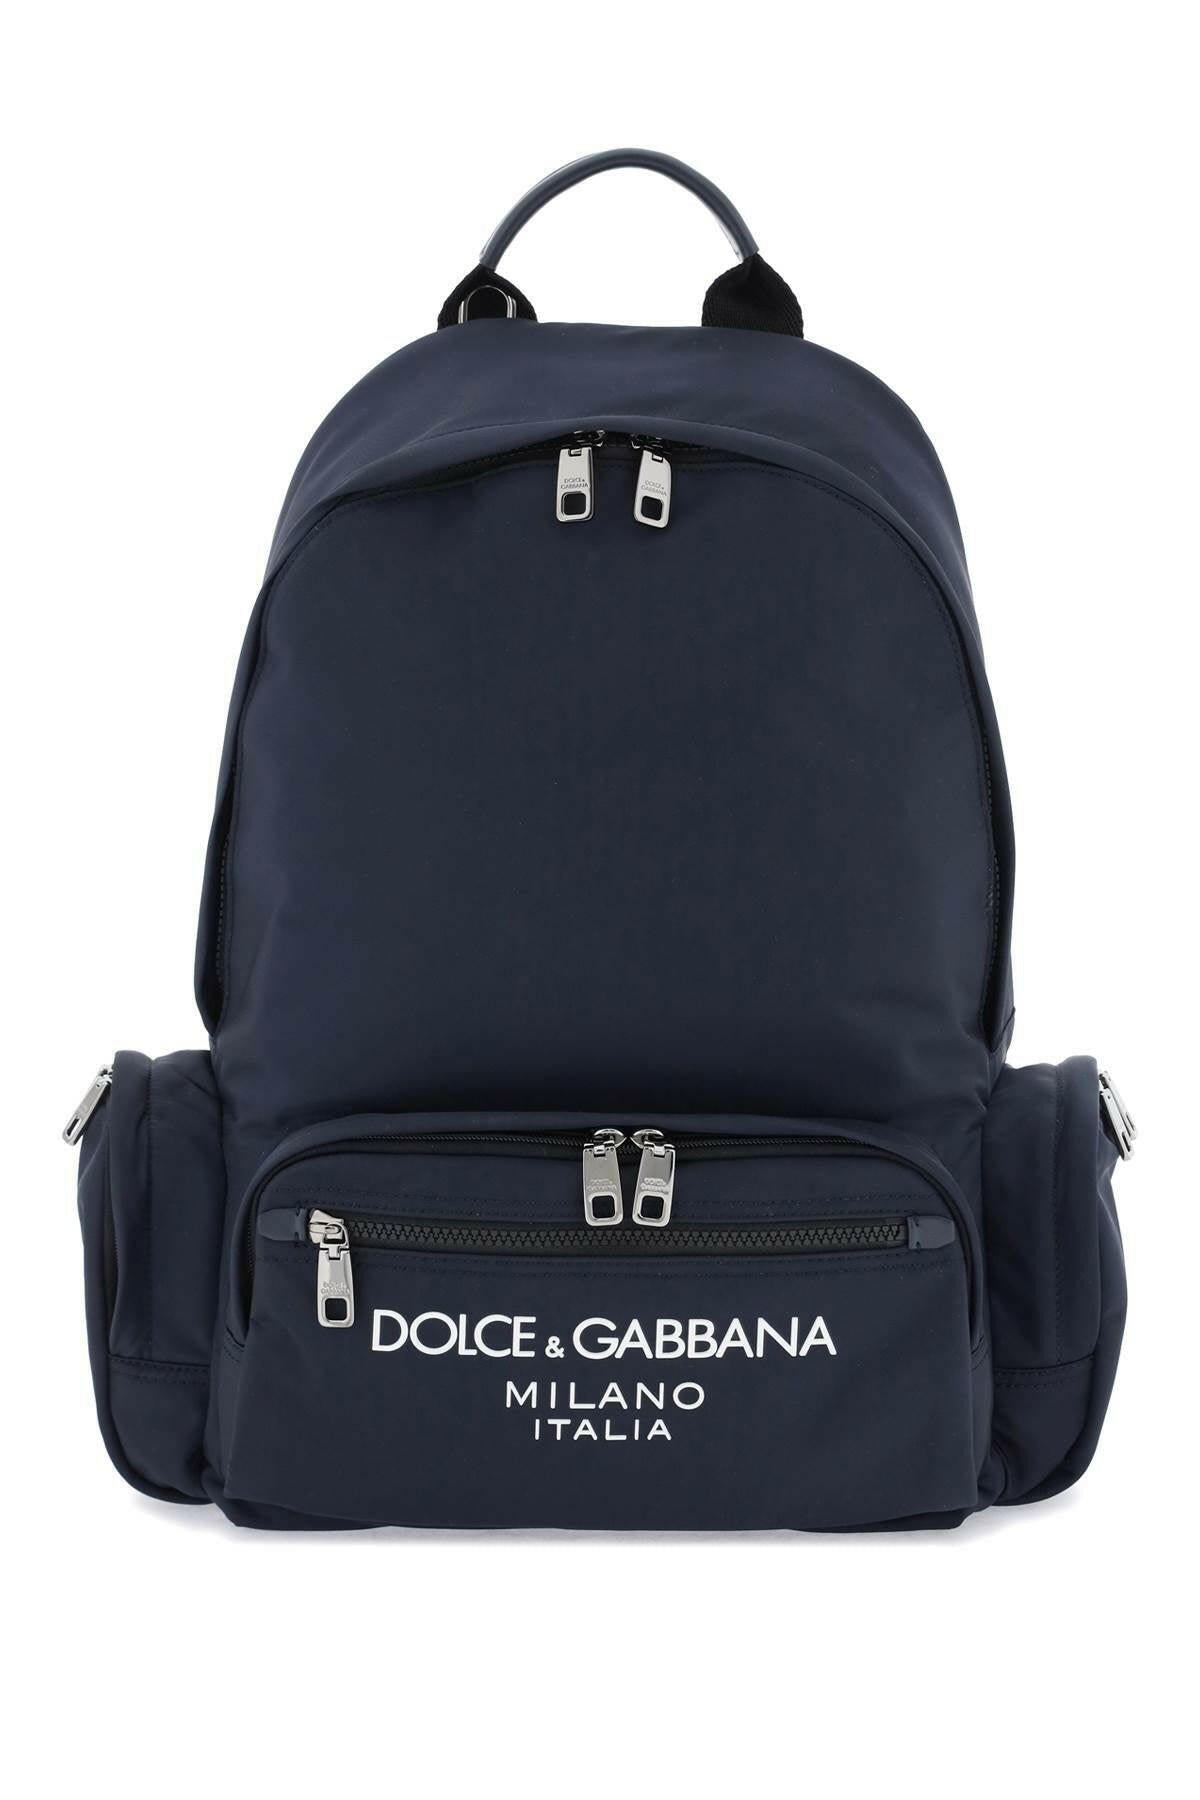 Dolce & Gabbana Nylon Backpack With Logo - JOHN JULIA